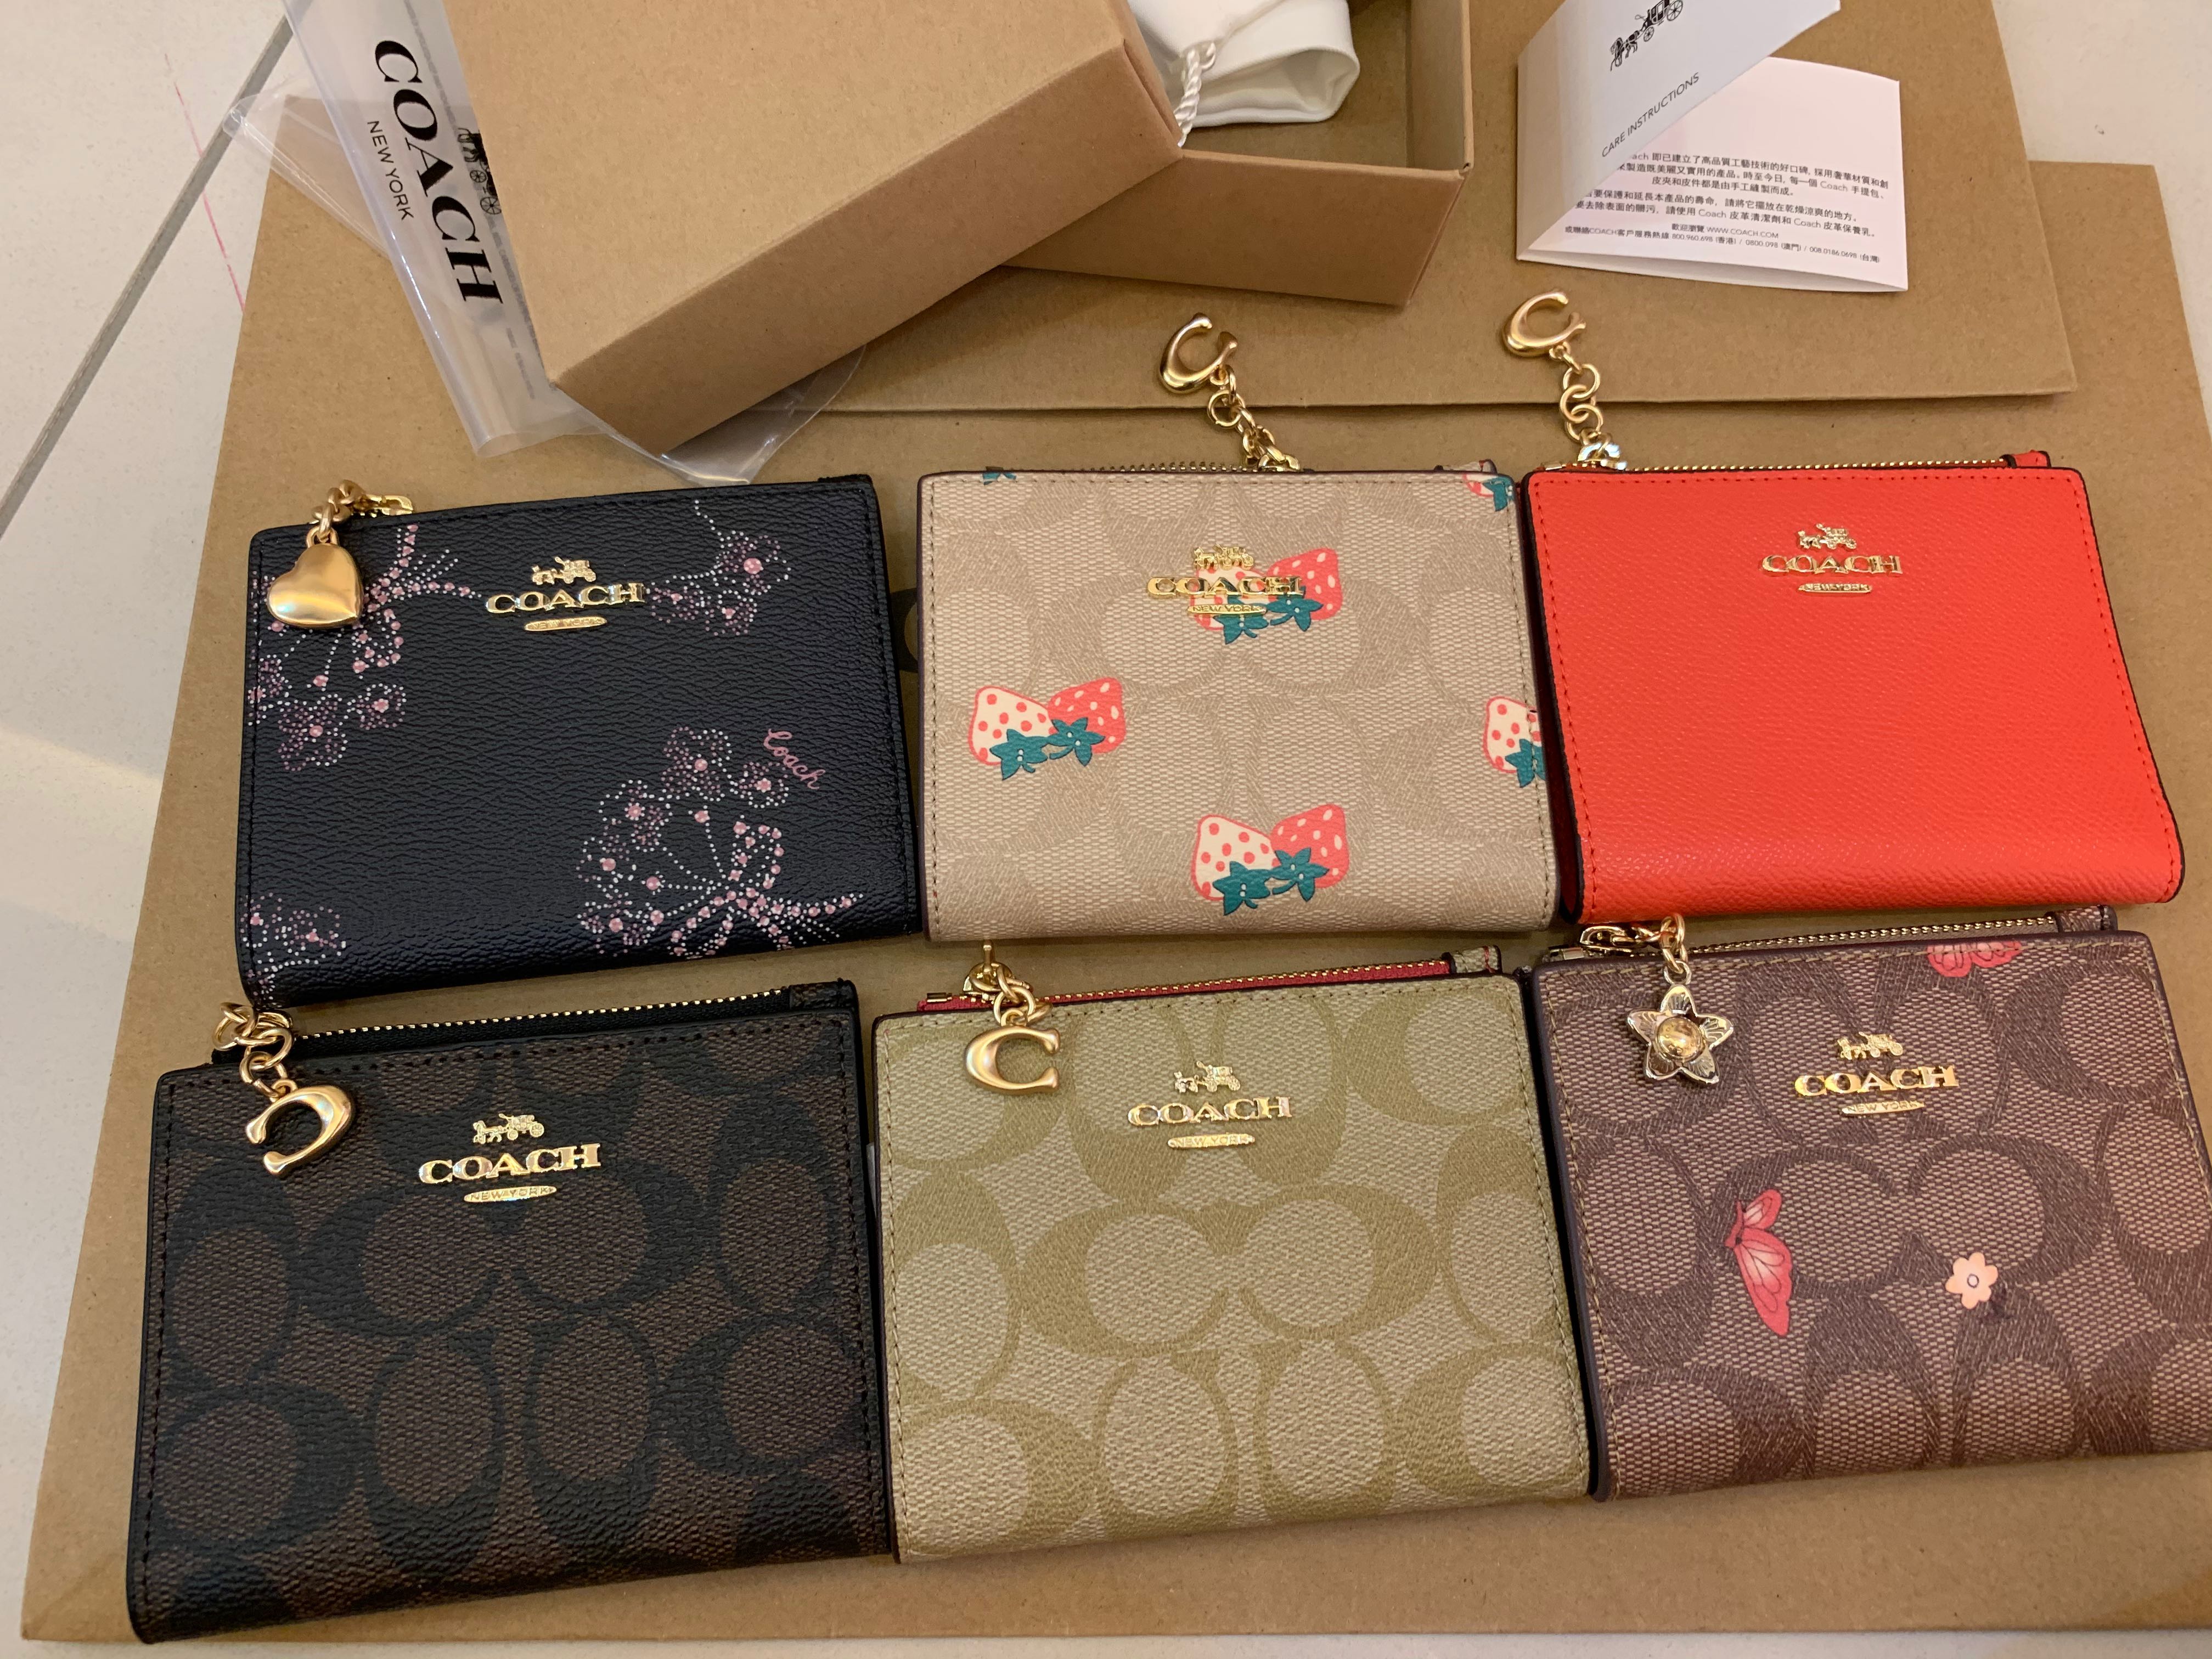 COACH Brown Sling Bag Signature Crossbody Handbag Khaki - Price in India |  Flipkart.com